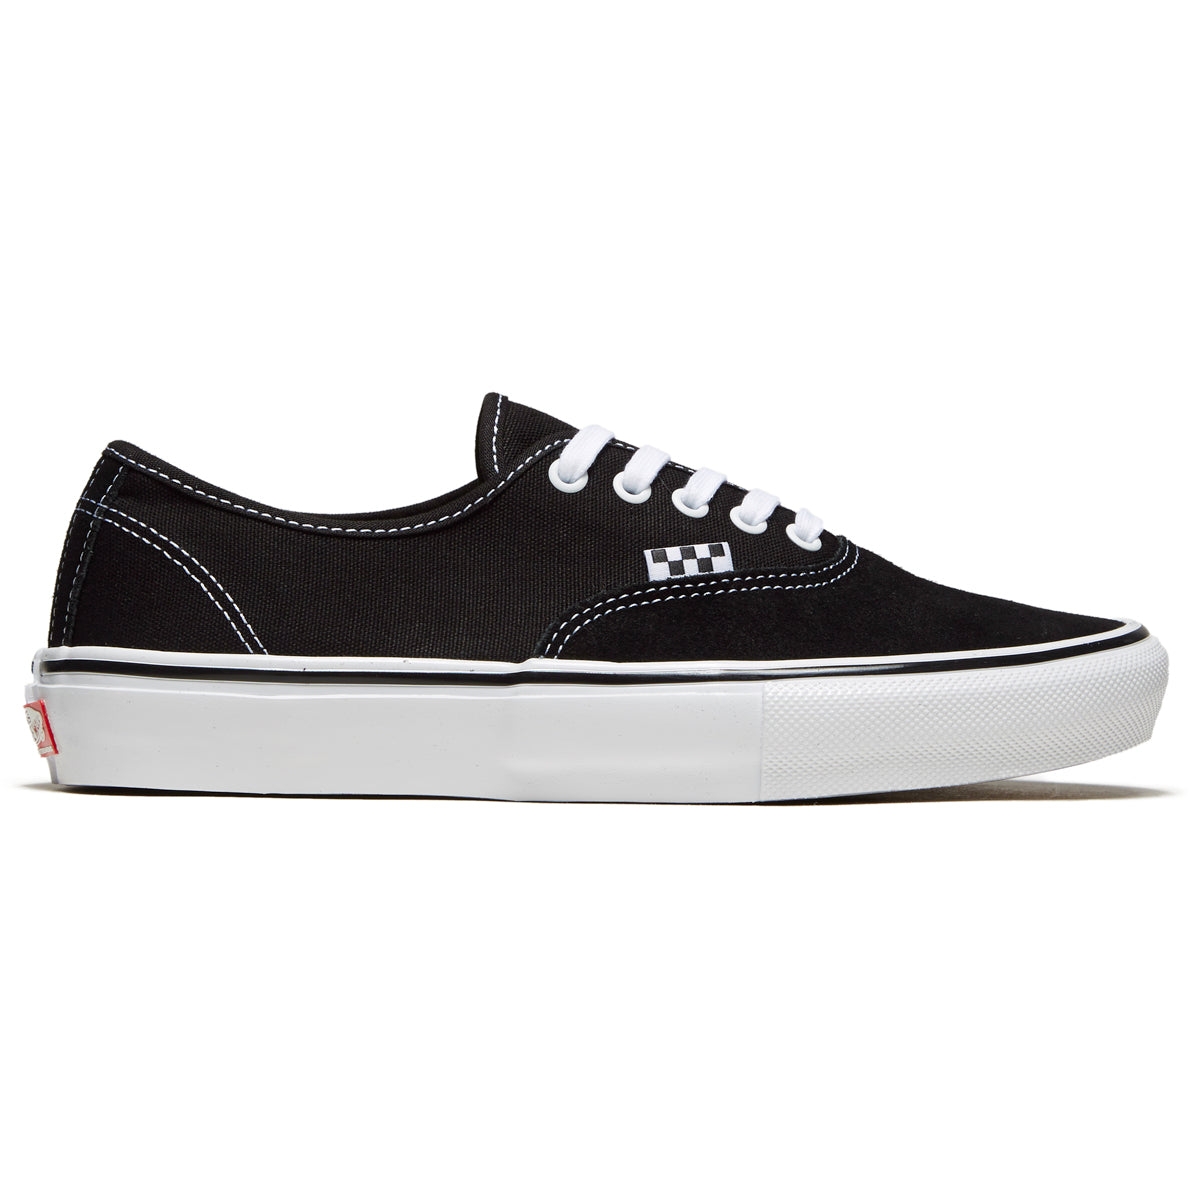 For tidlig Uganda omvendt Vans Skate Authentic Shoes - Black/White – CCS